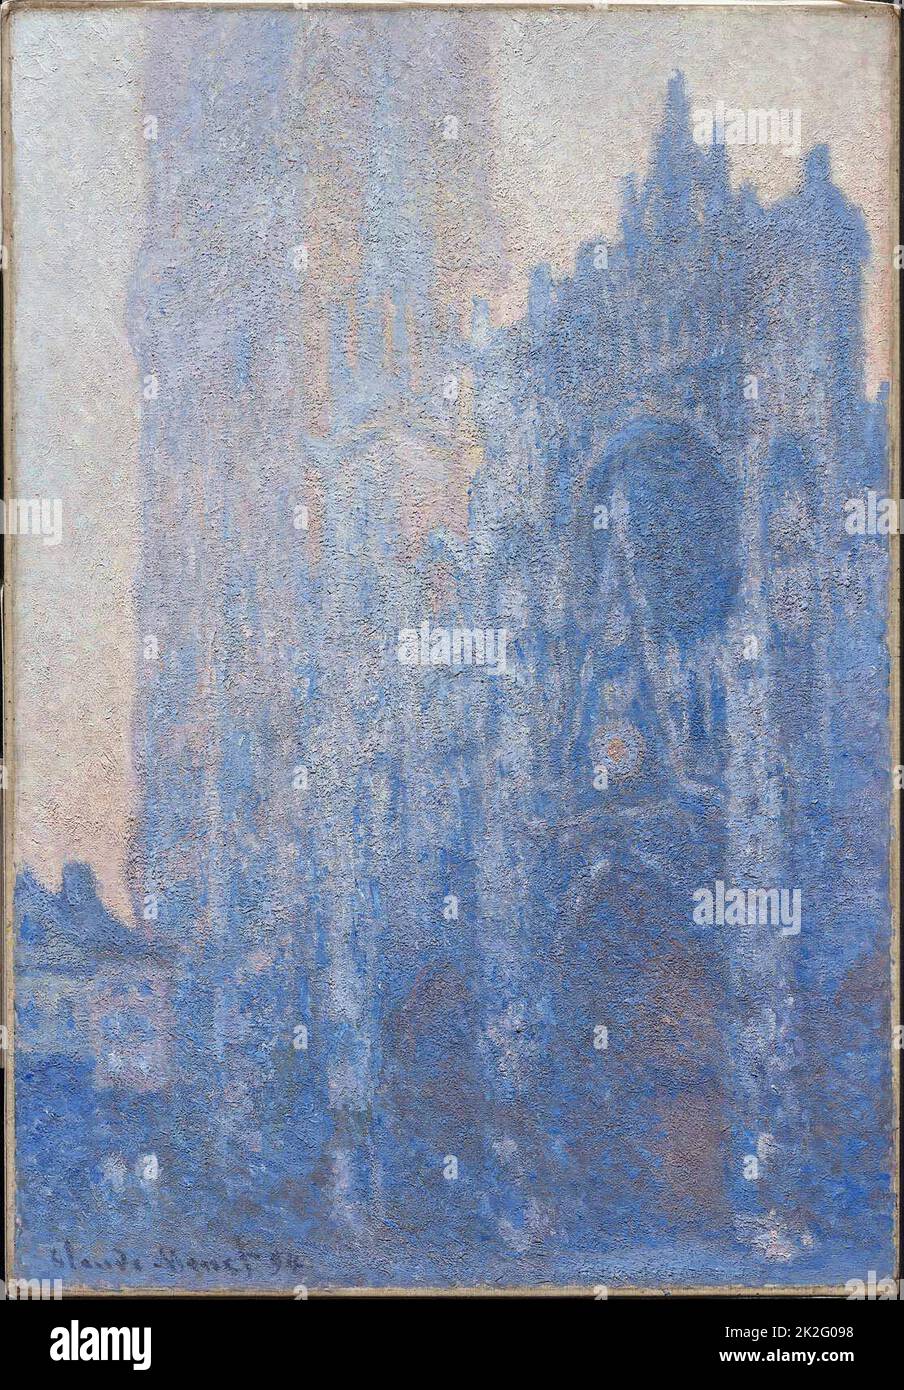 Claude Monet http://www.tuttartpitturasculturapoesiamusica.com Stock Photo